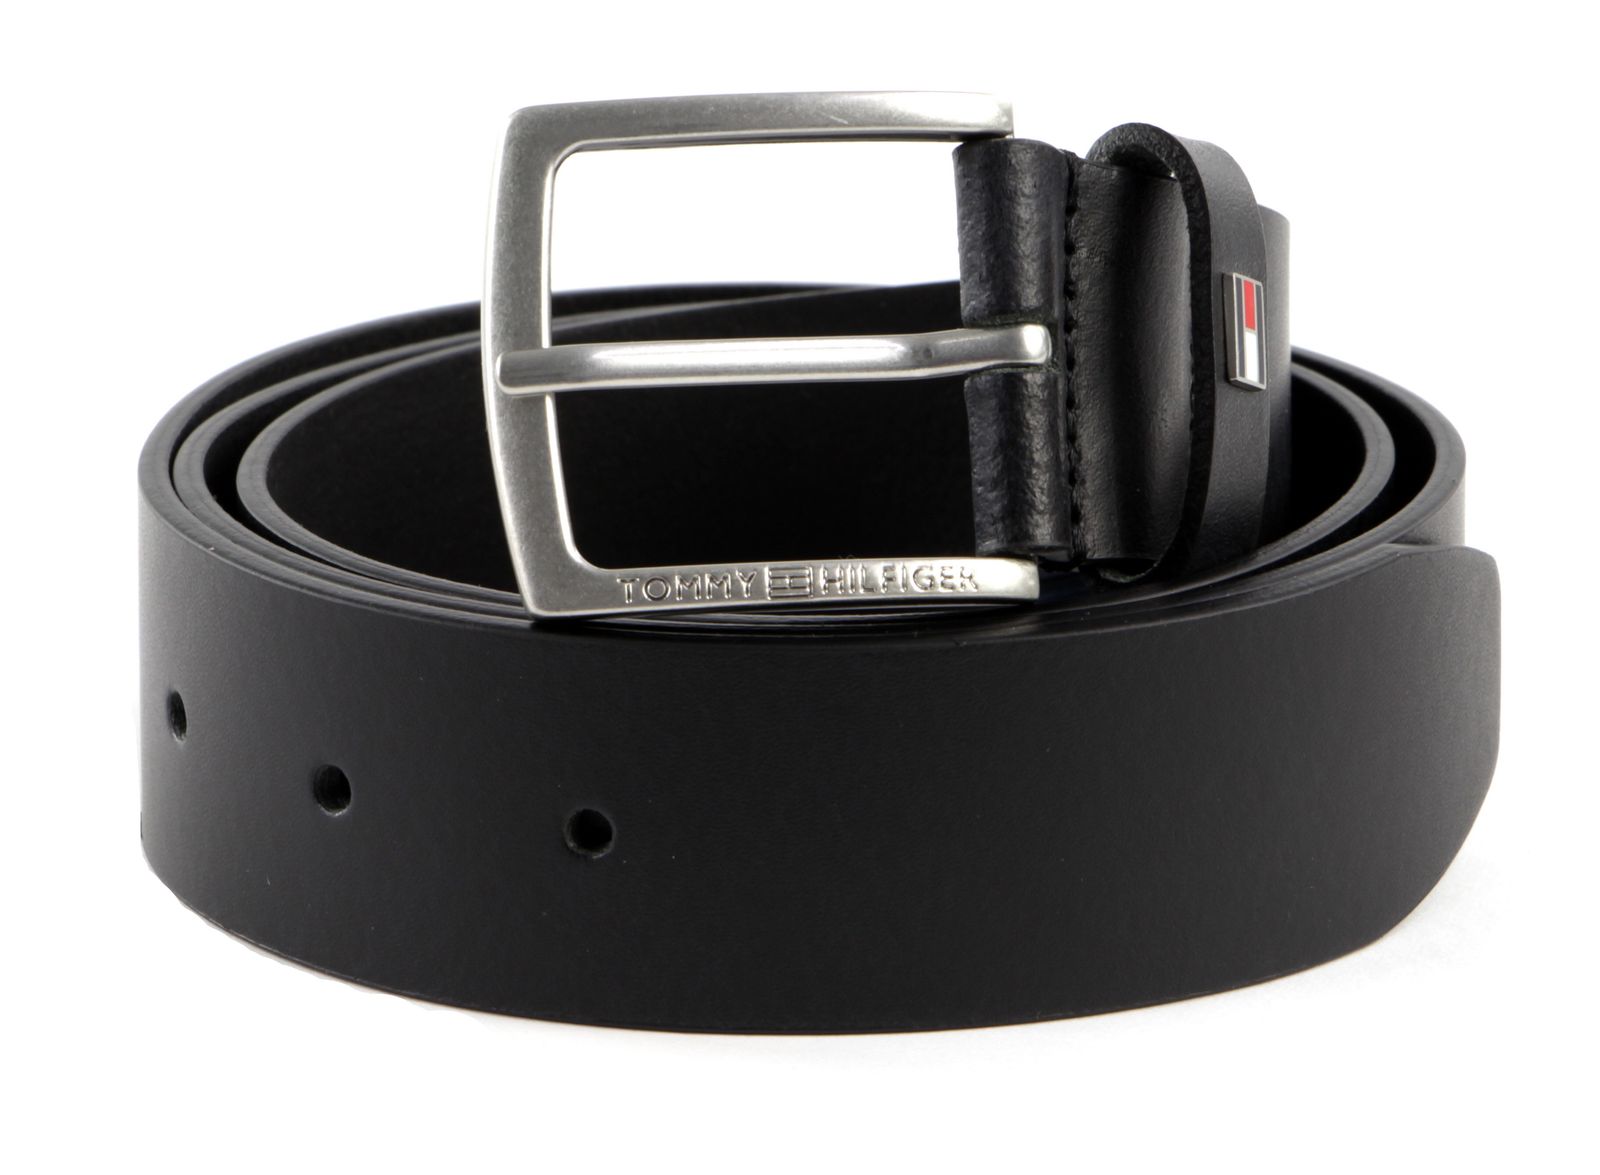 TOMMY HILFIGER Casual Leather Belt 3.5 G W90 Gürtel Accessoire Black | eBay